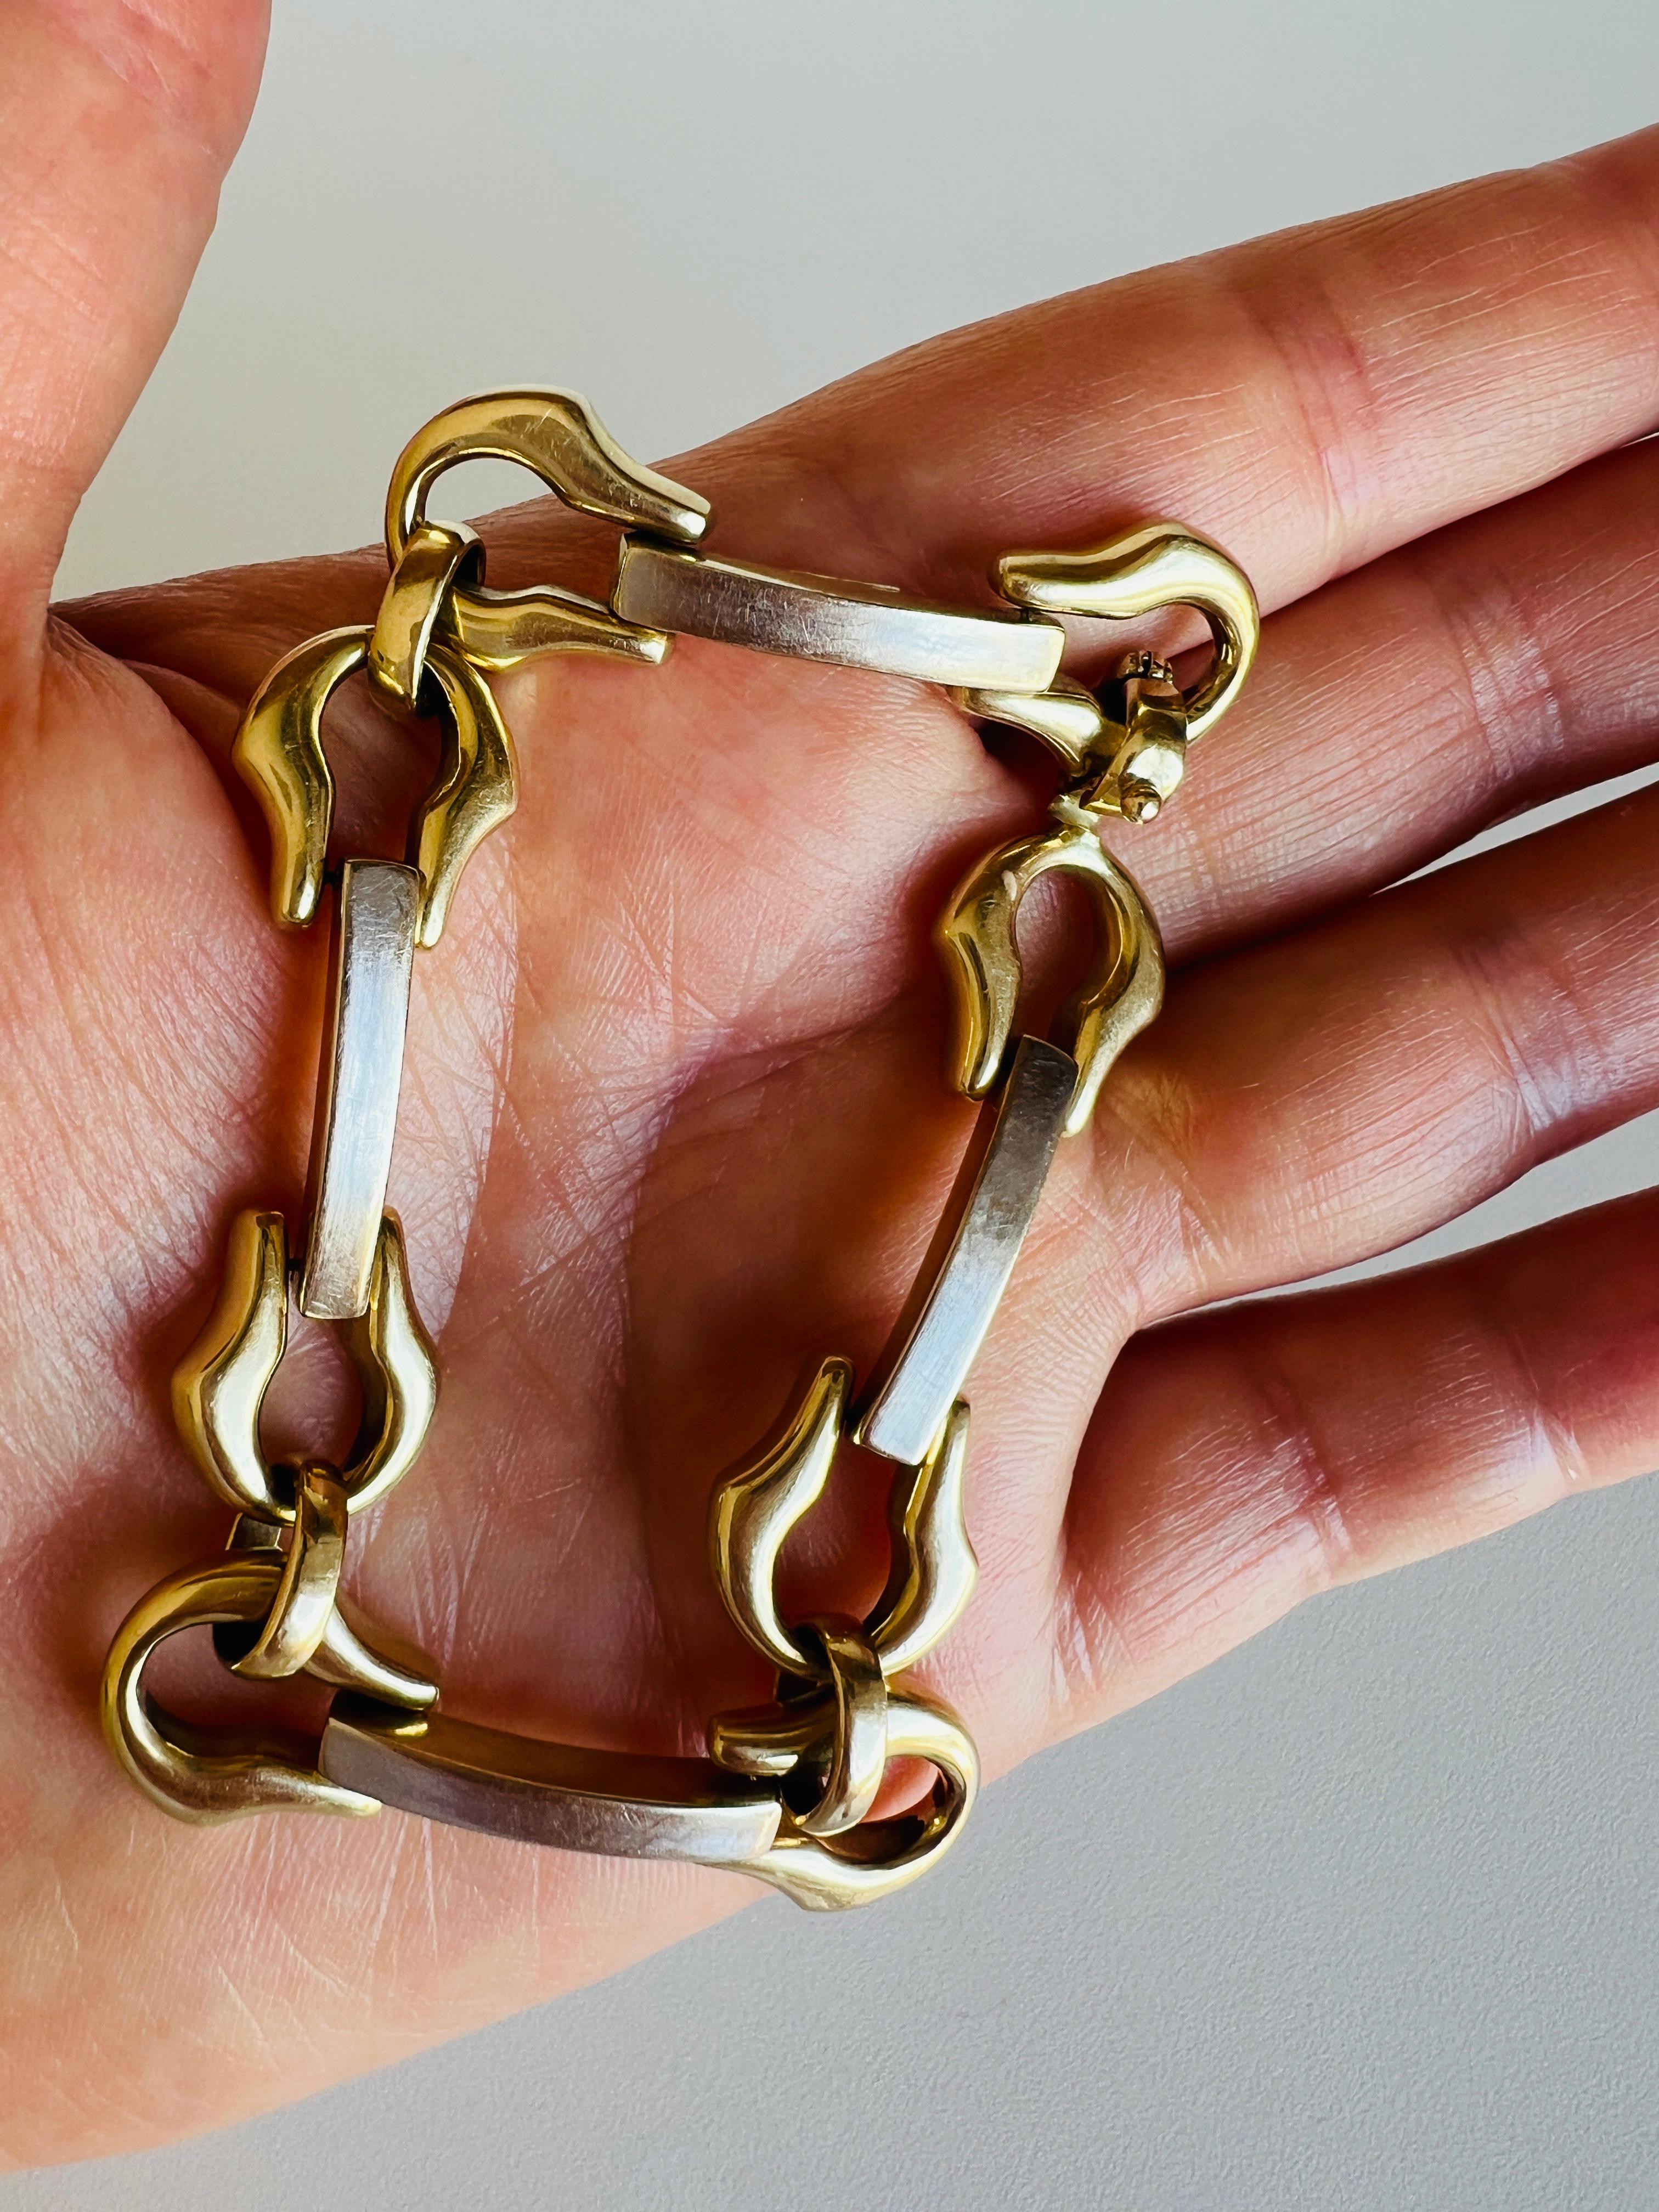 Women's 1940s 14k Italian Yellow & White Gold Retro Bracelet Horse Bit Cable Chain Link